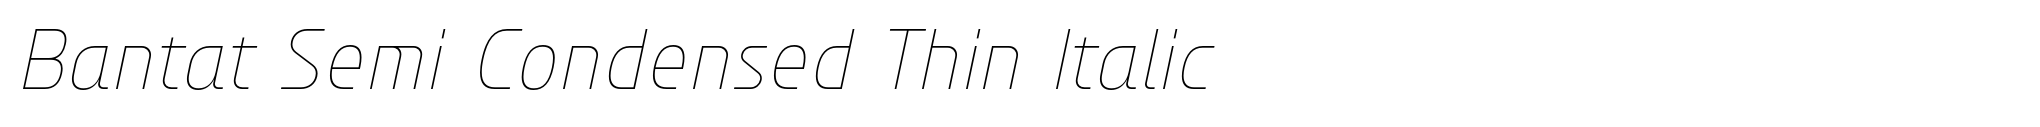 Bantat Semi Condensed Thin Italic image